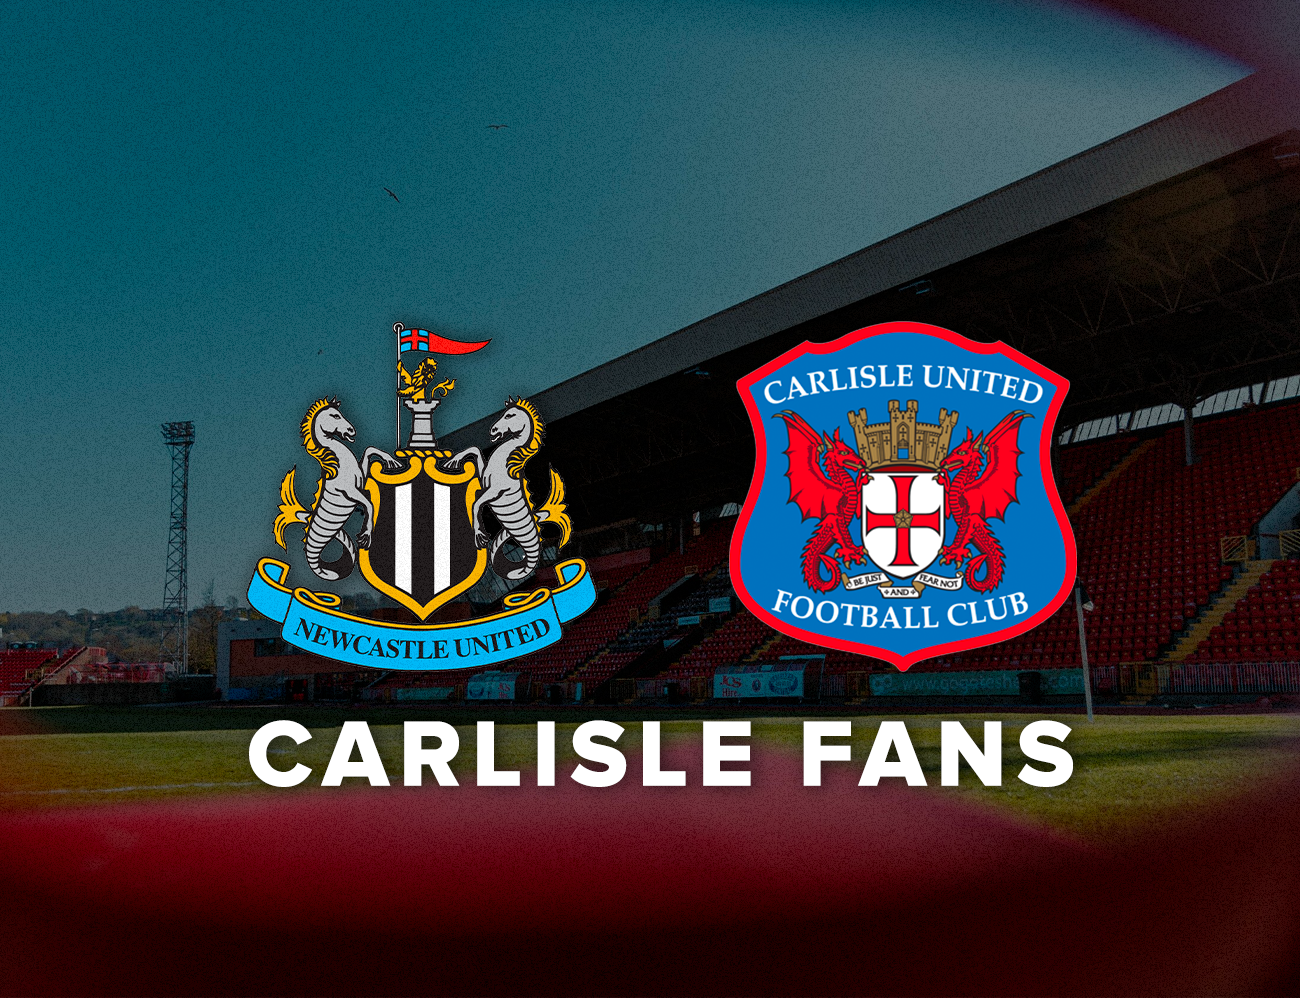 Carlisle United - Events